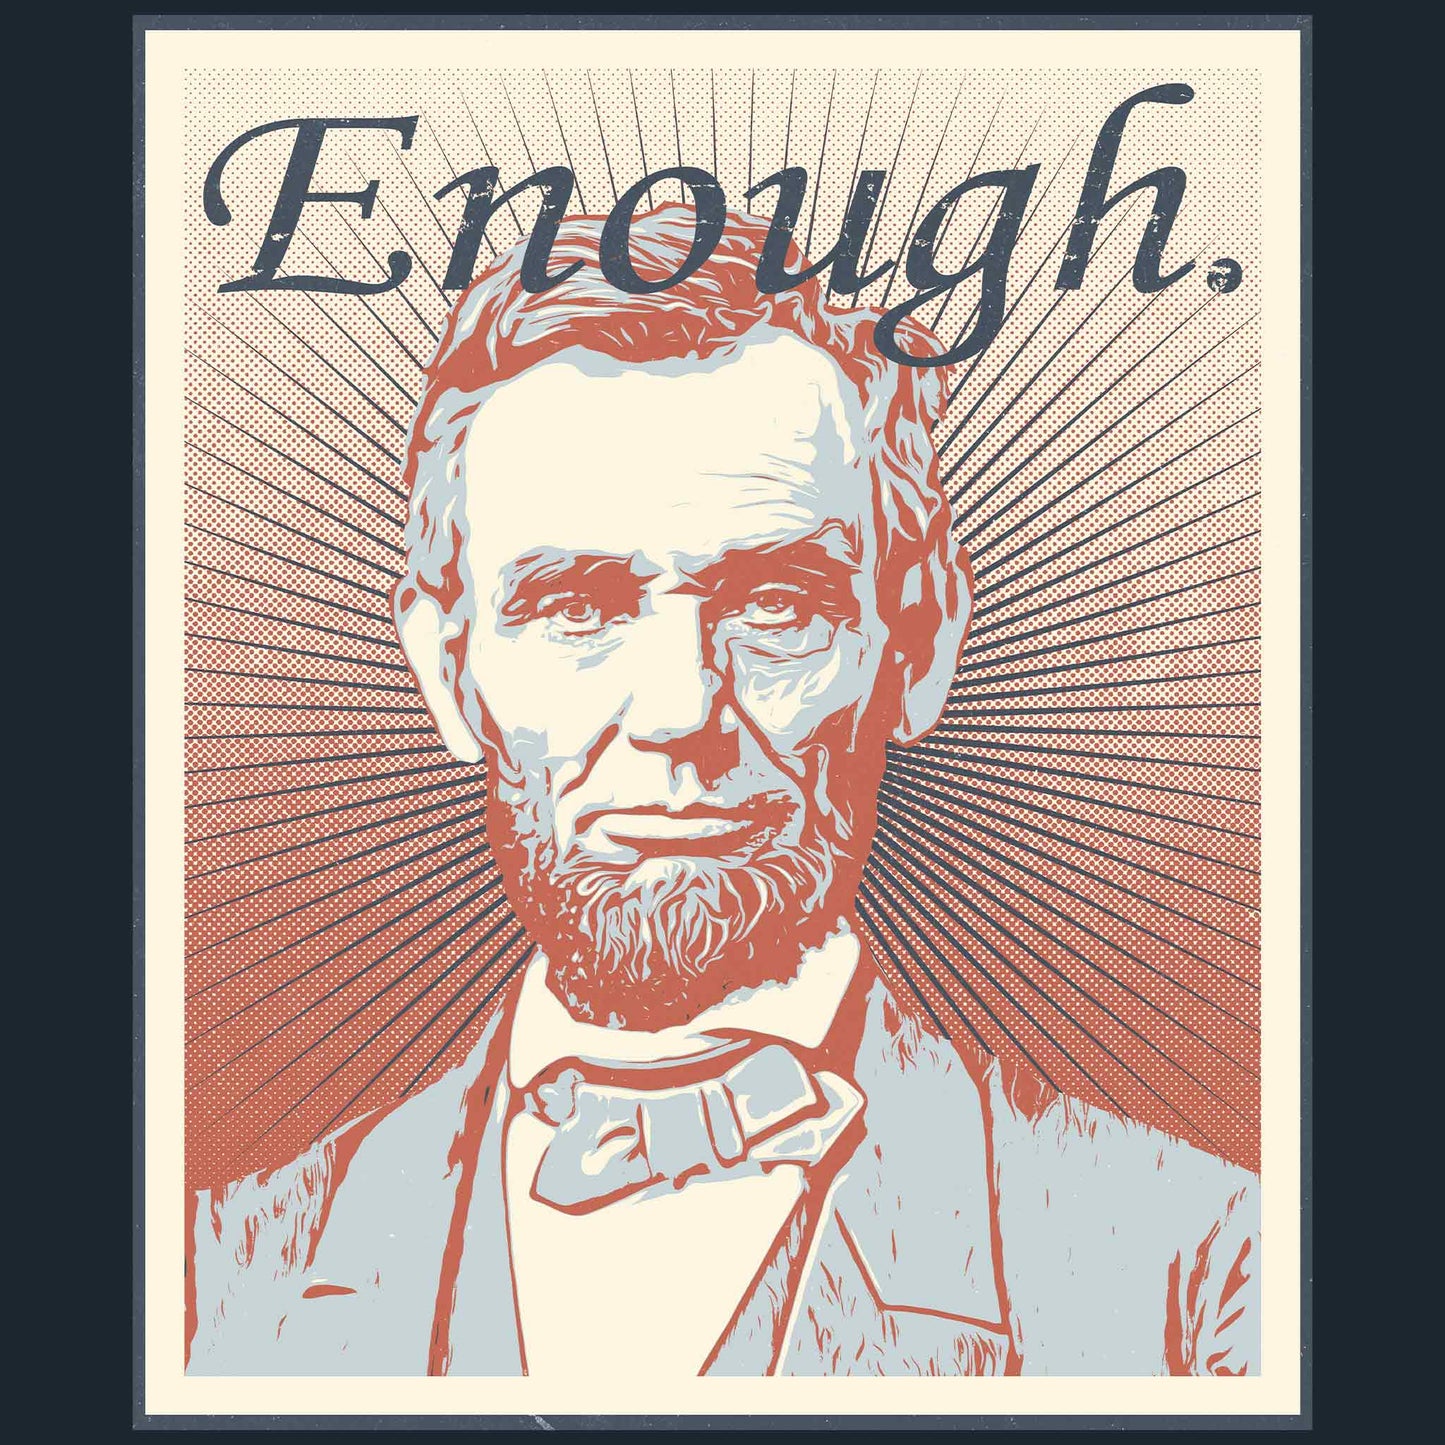 Enough. - Abraham Lincoln T-Shirt